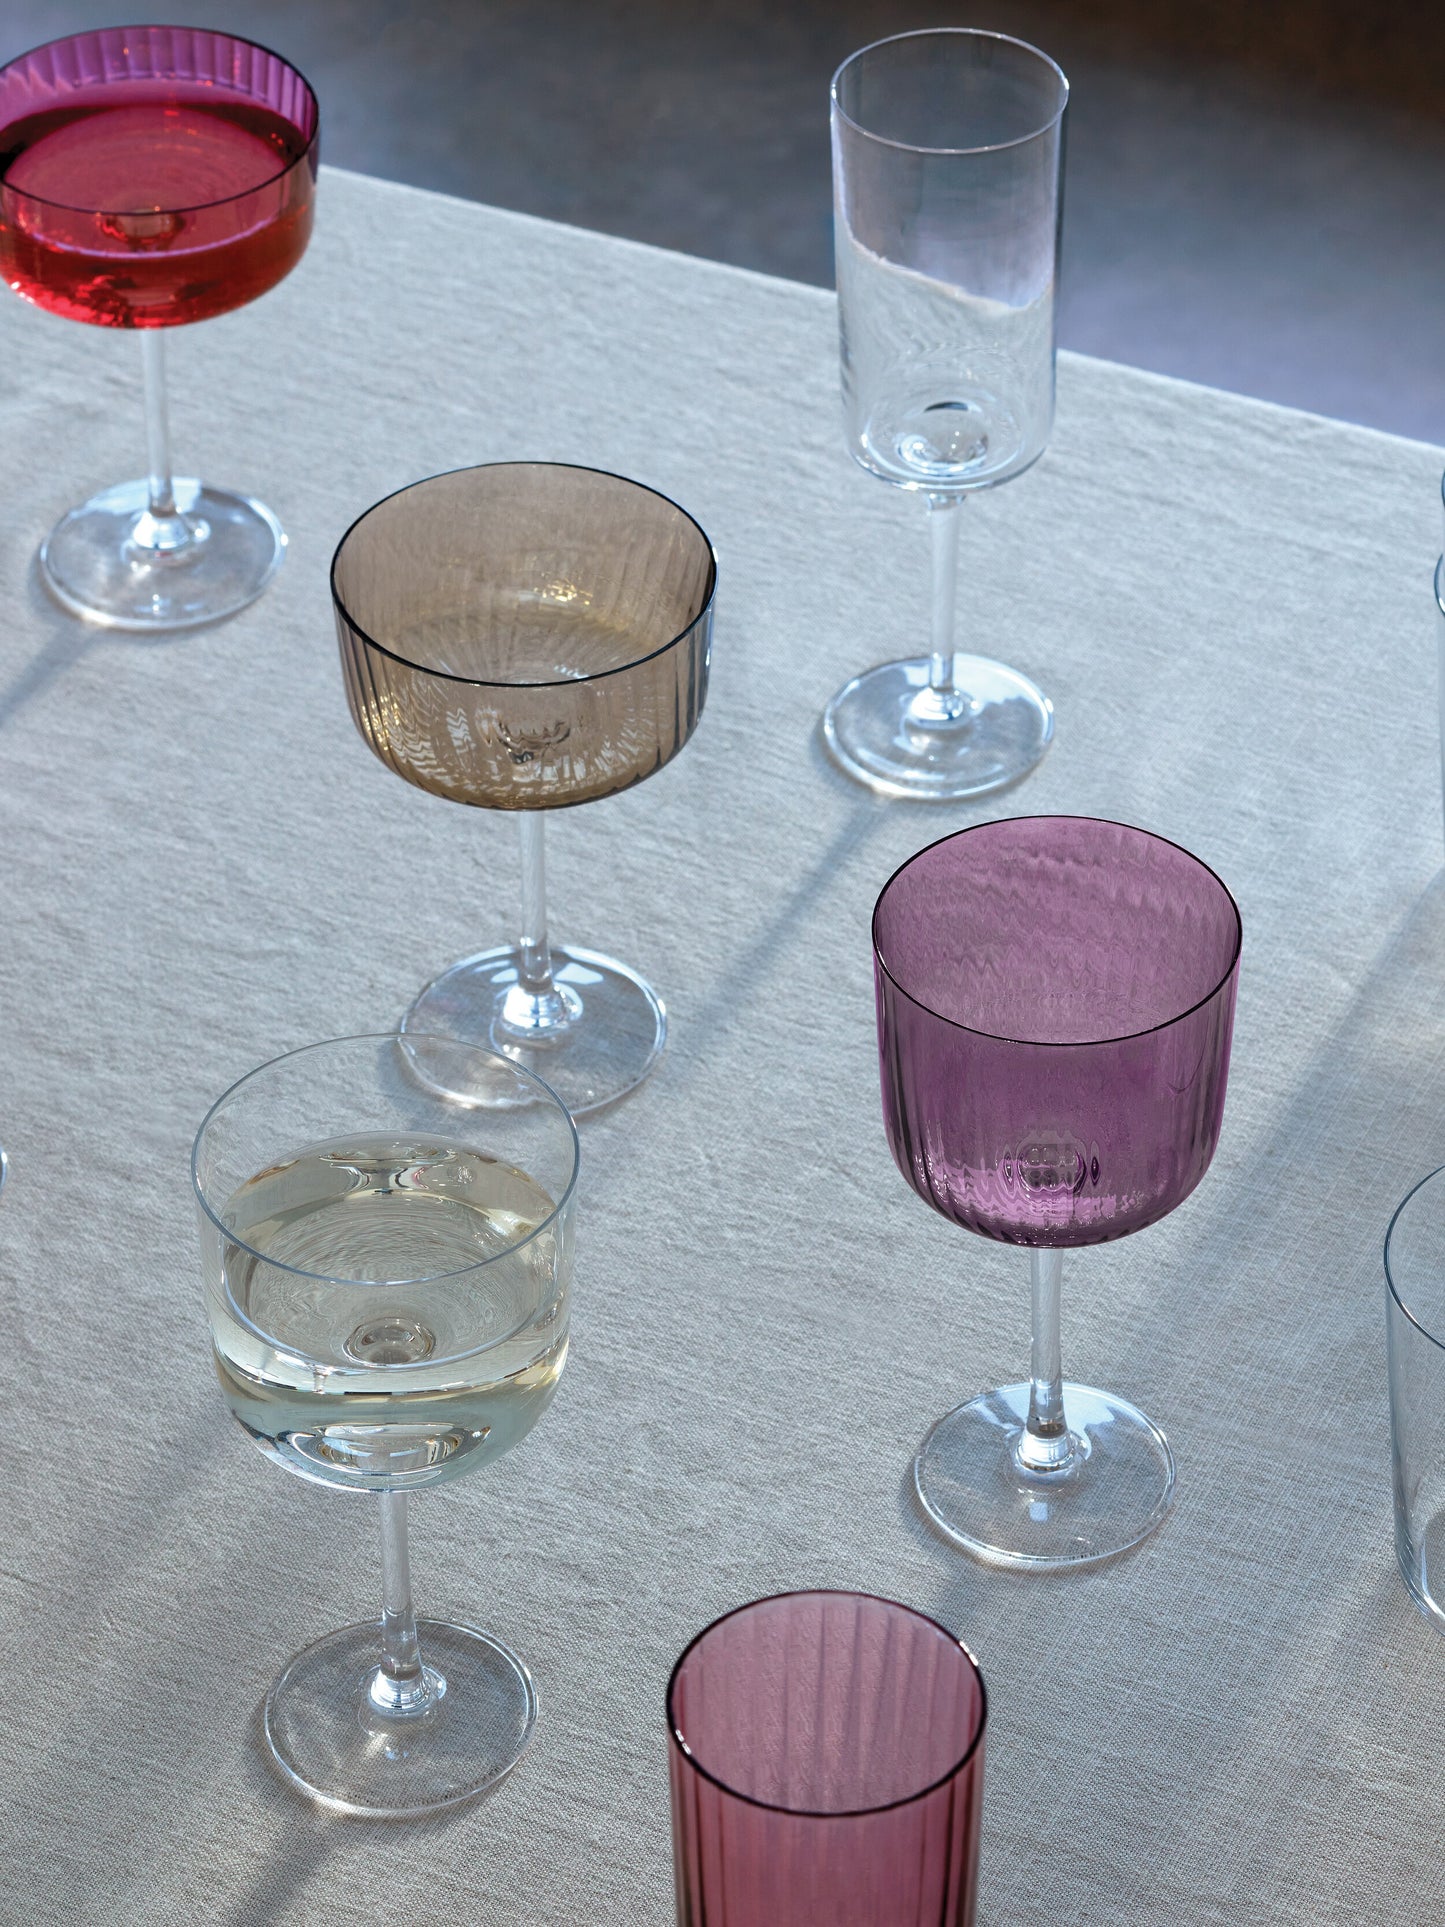 LSA Gems Wine Glass 250ml - Garnet